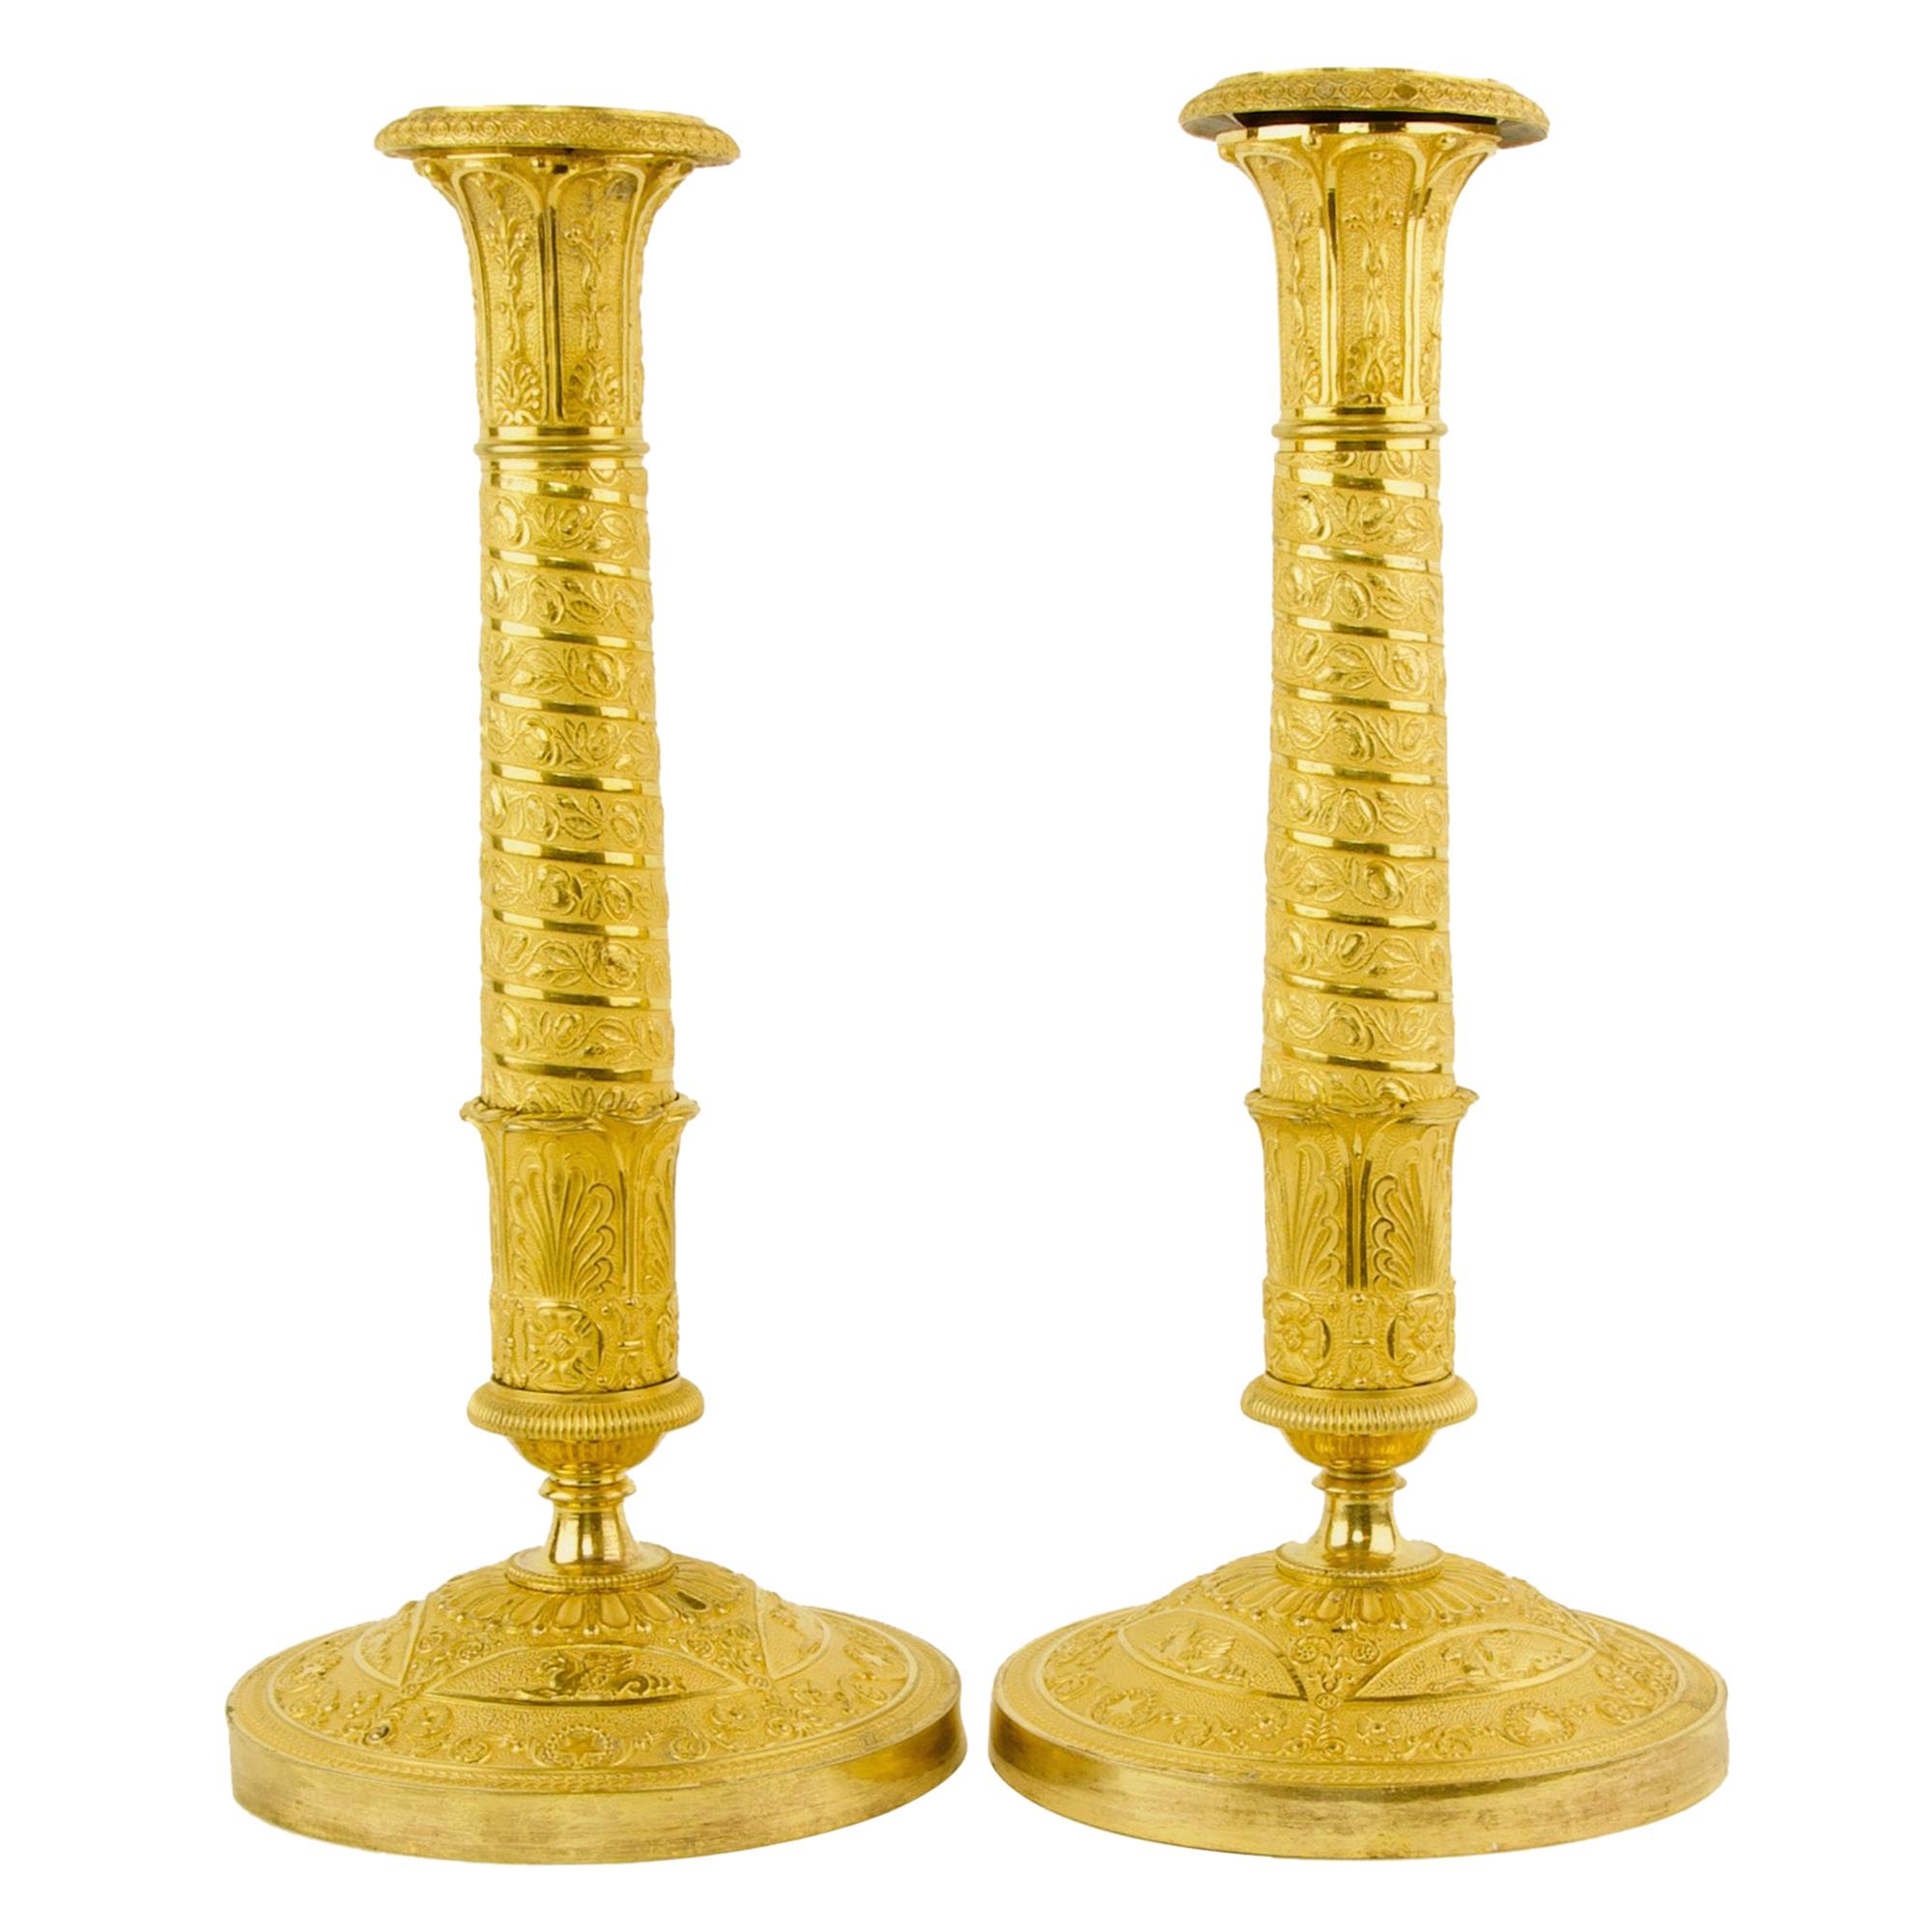 Pair of Early 19th Century Empire Trajan's Column Ormolu Candlesticks